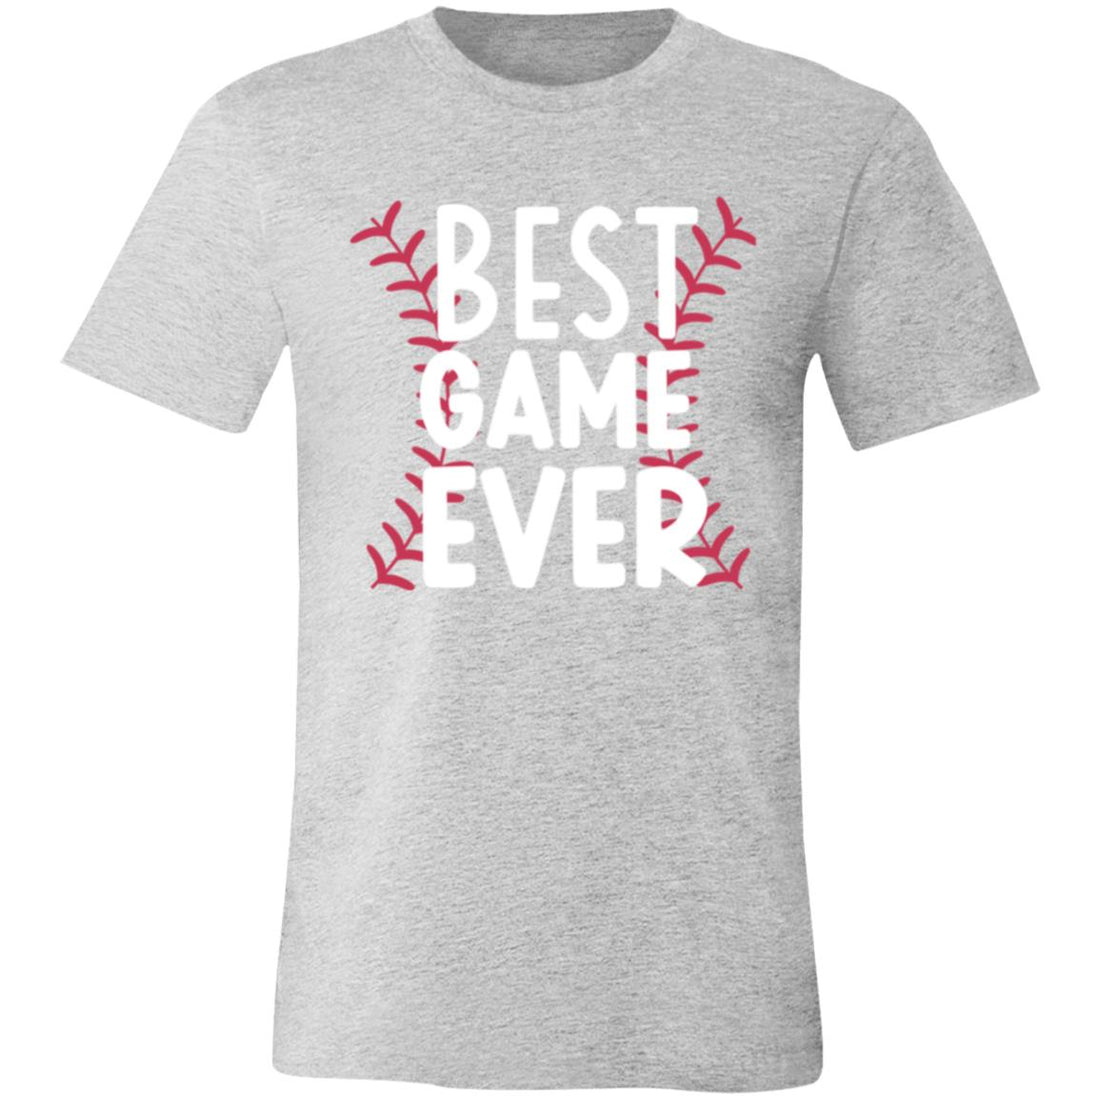 Best Game Ever Short-Sleeve T-Shirt - T-Shirts - Positively Sassy - Best Game Ever Short-Sleeve T-Shirt